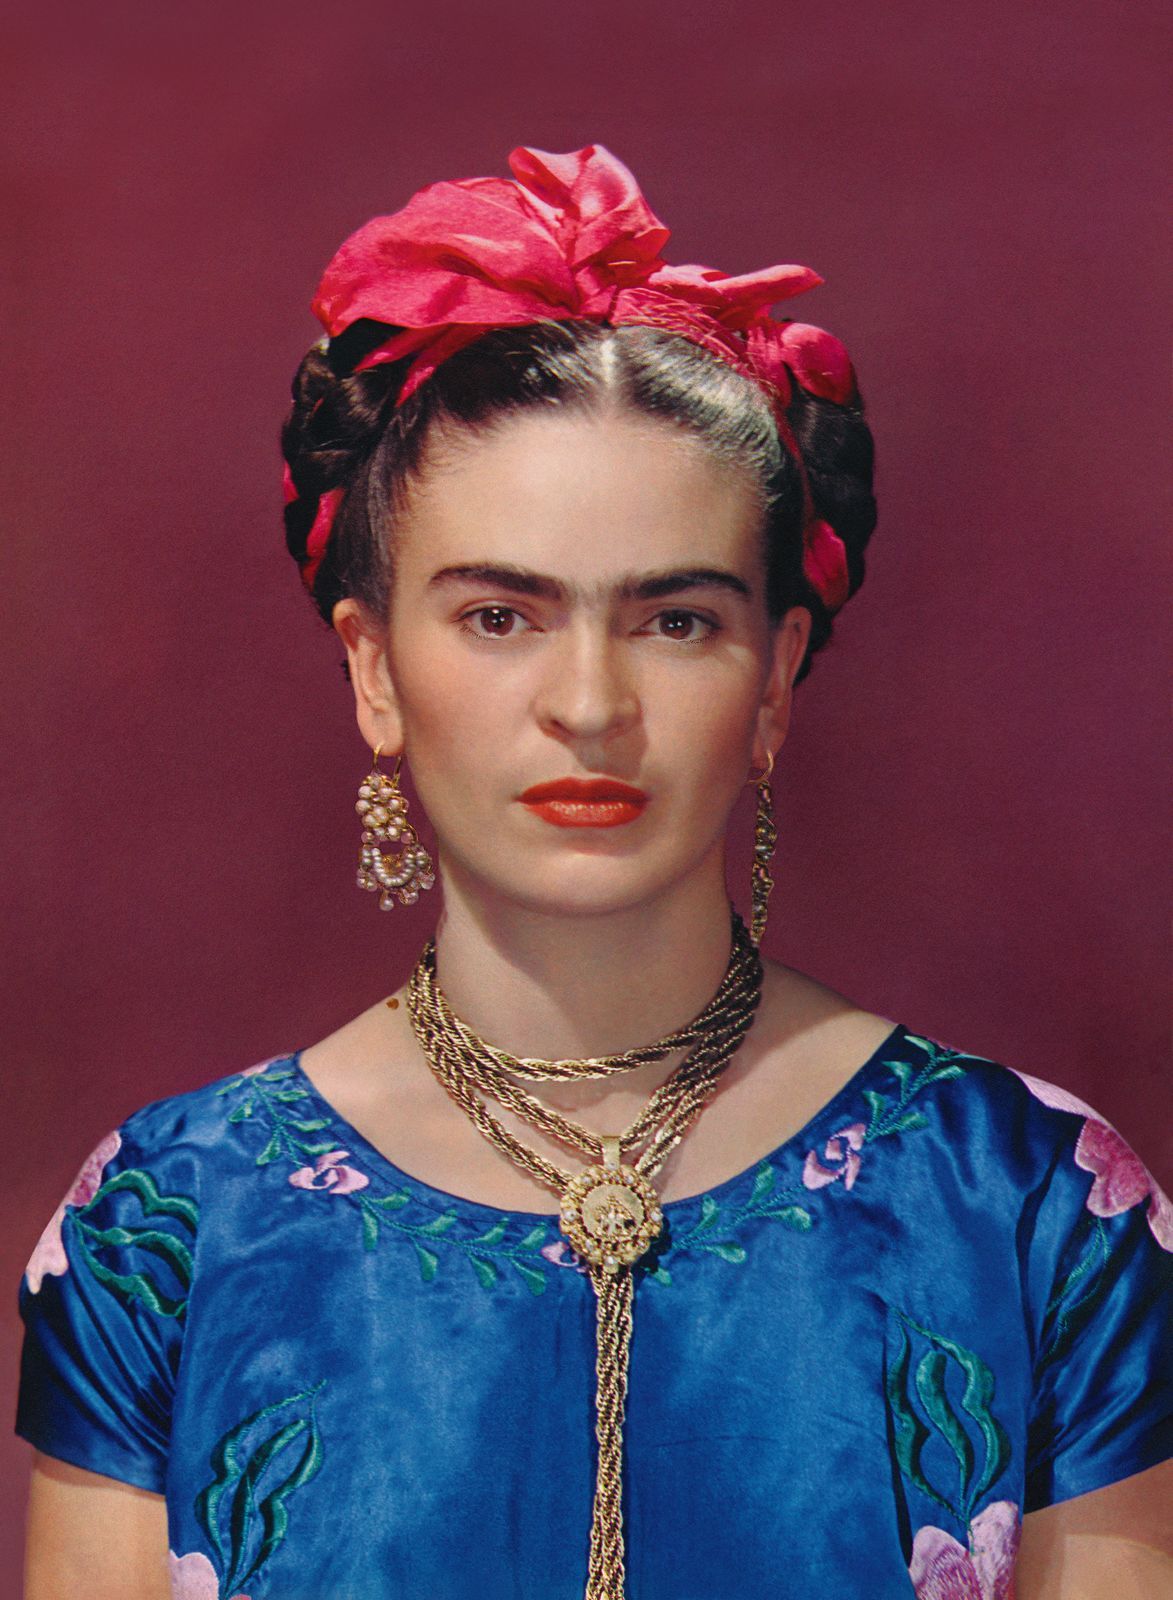 Exhibition on Screen Presents, "Frida Kahlo"